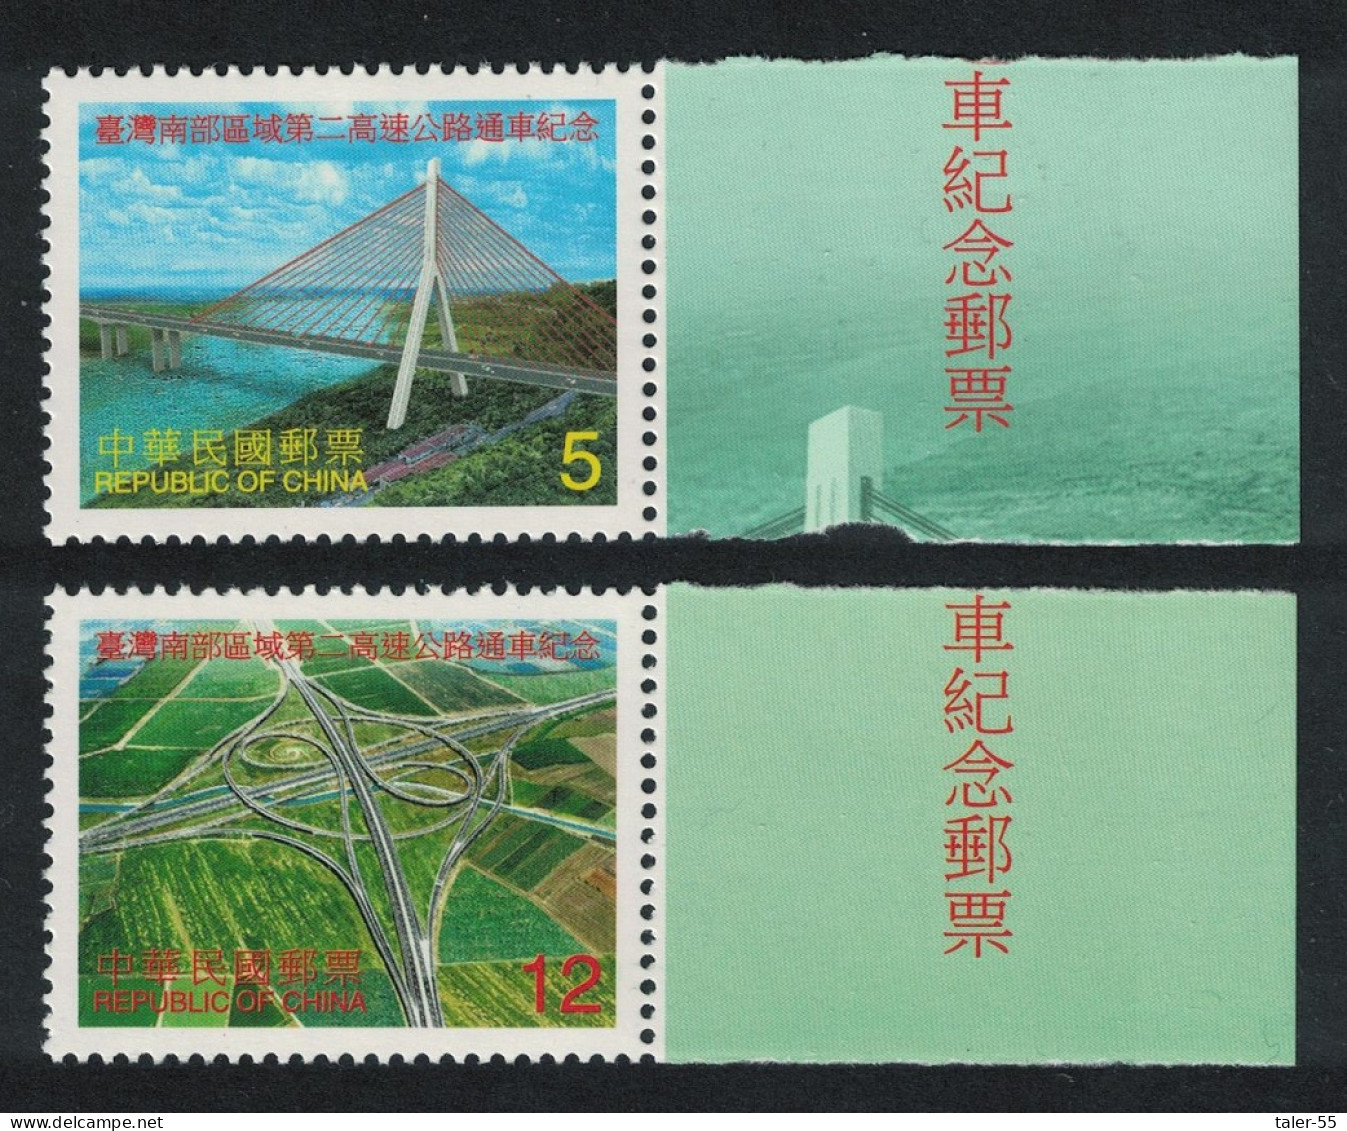 Taiwan Second Southern Freeway 2v Margins 2000 MNH SG#2620-2621 - Nuovi